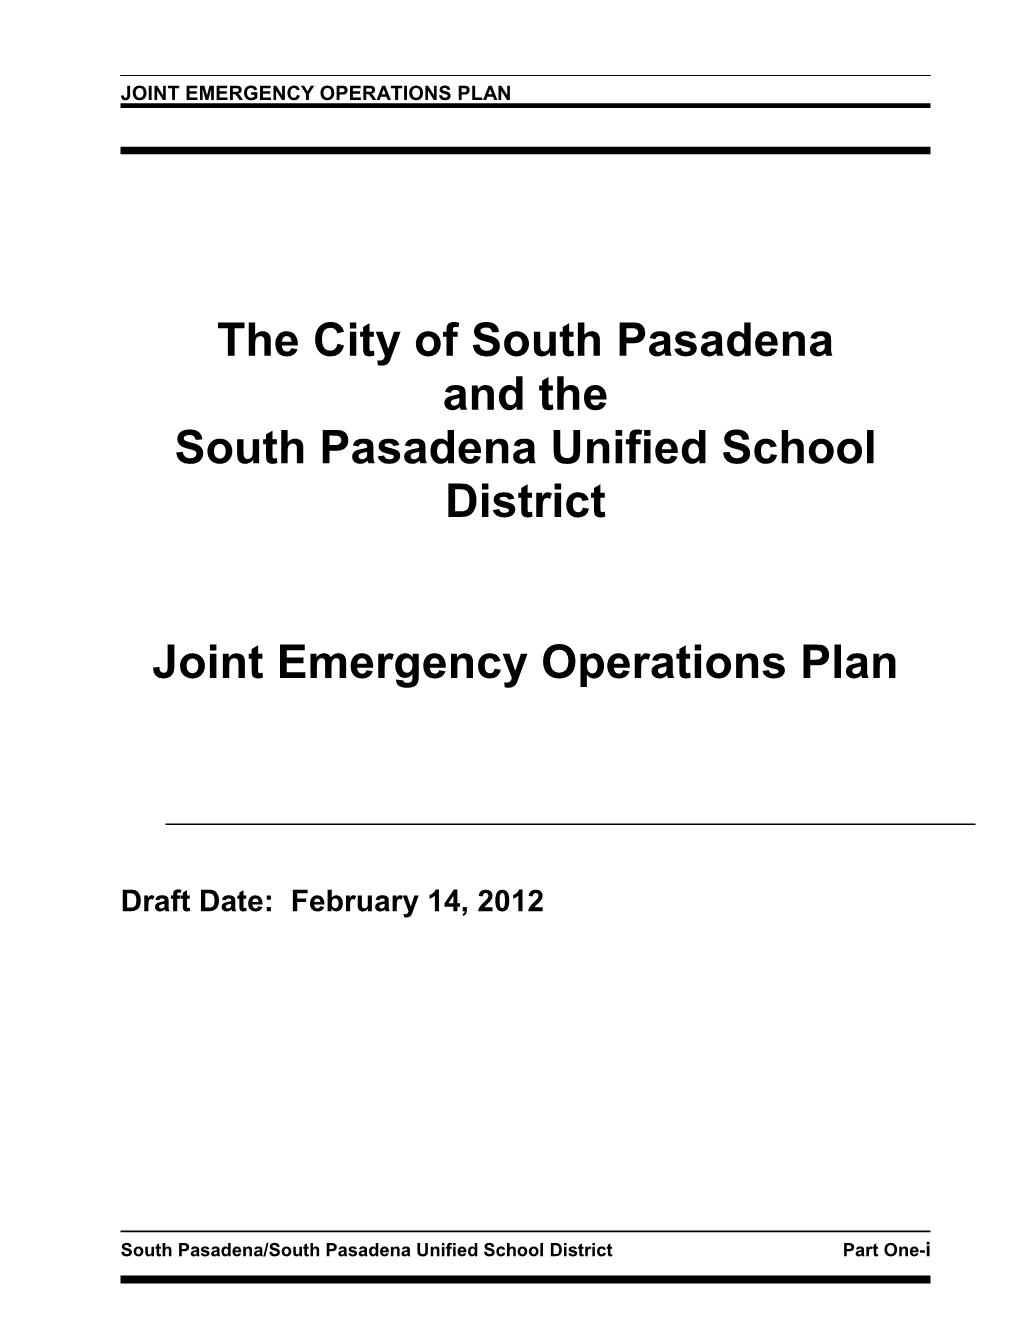 An Emergency Operations Plan